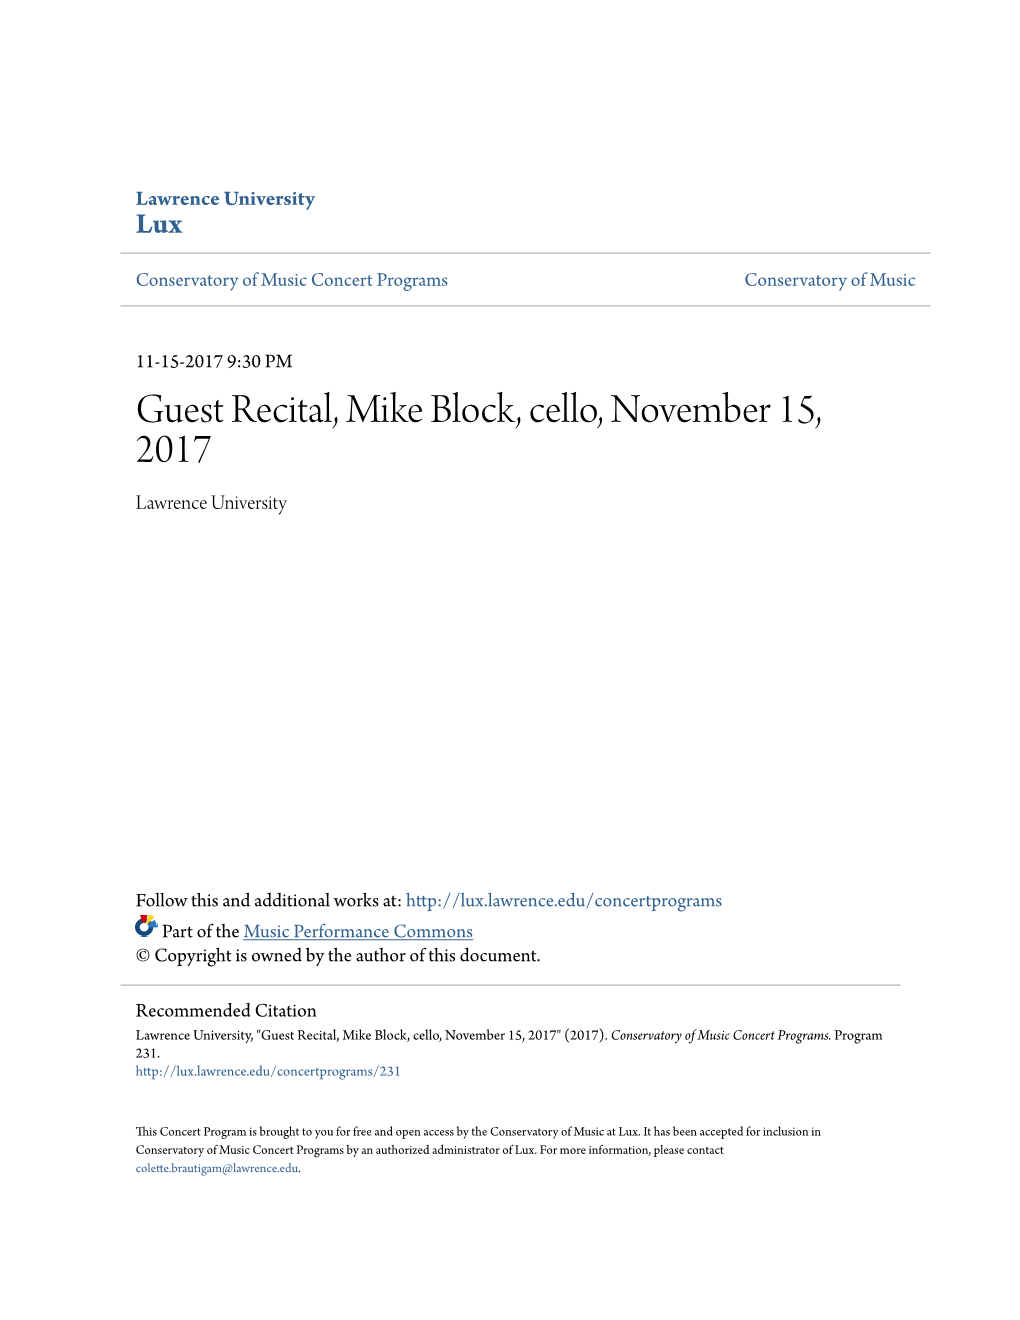 Guest Recital, Mike Block, Cello, November 15, 2017 Lawrence University